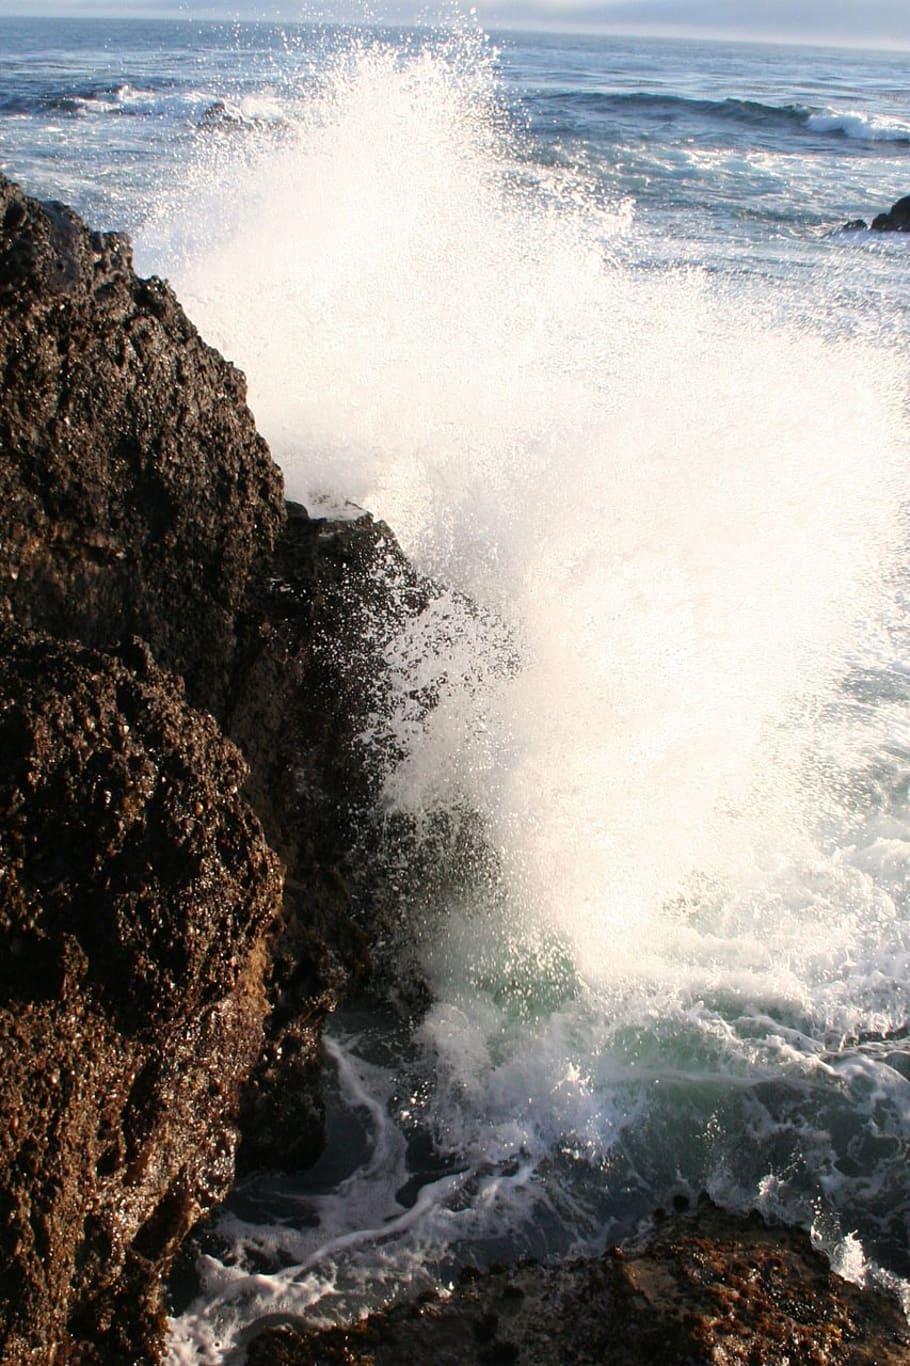 waves, crashing, splash, spray, rocks, ocean, surf, breaker, water, sea